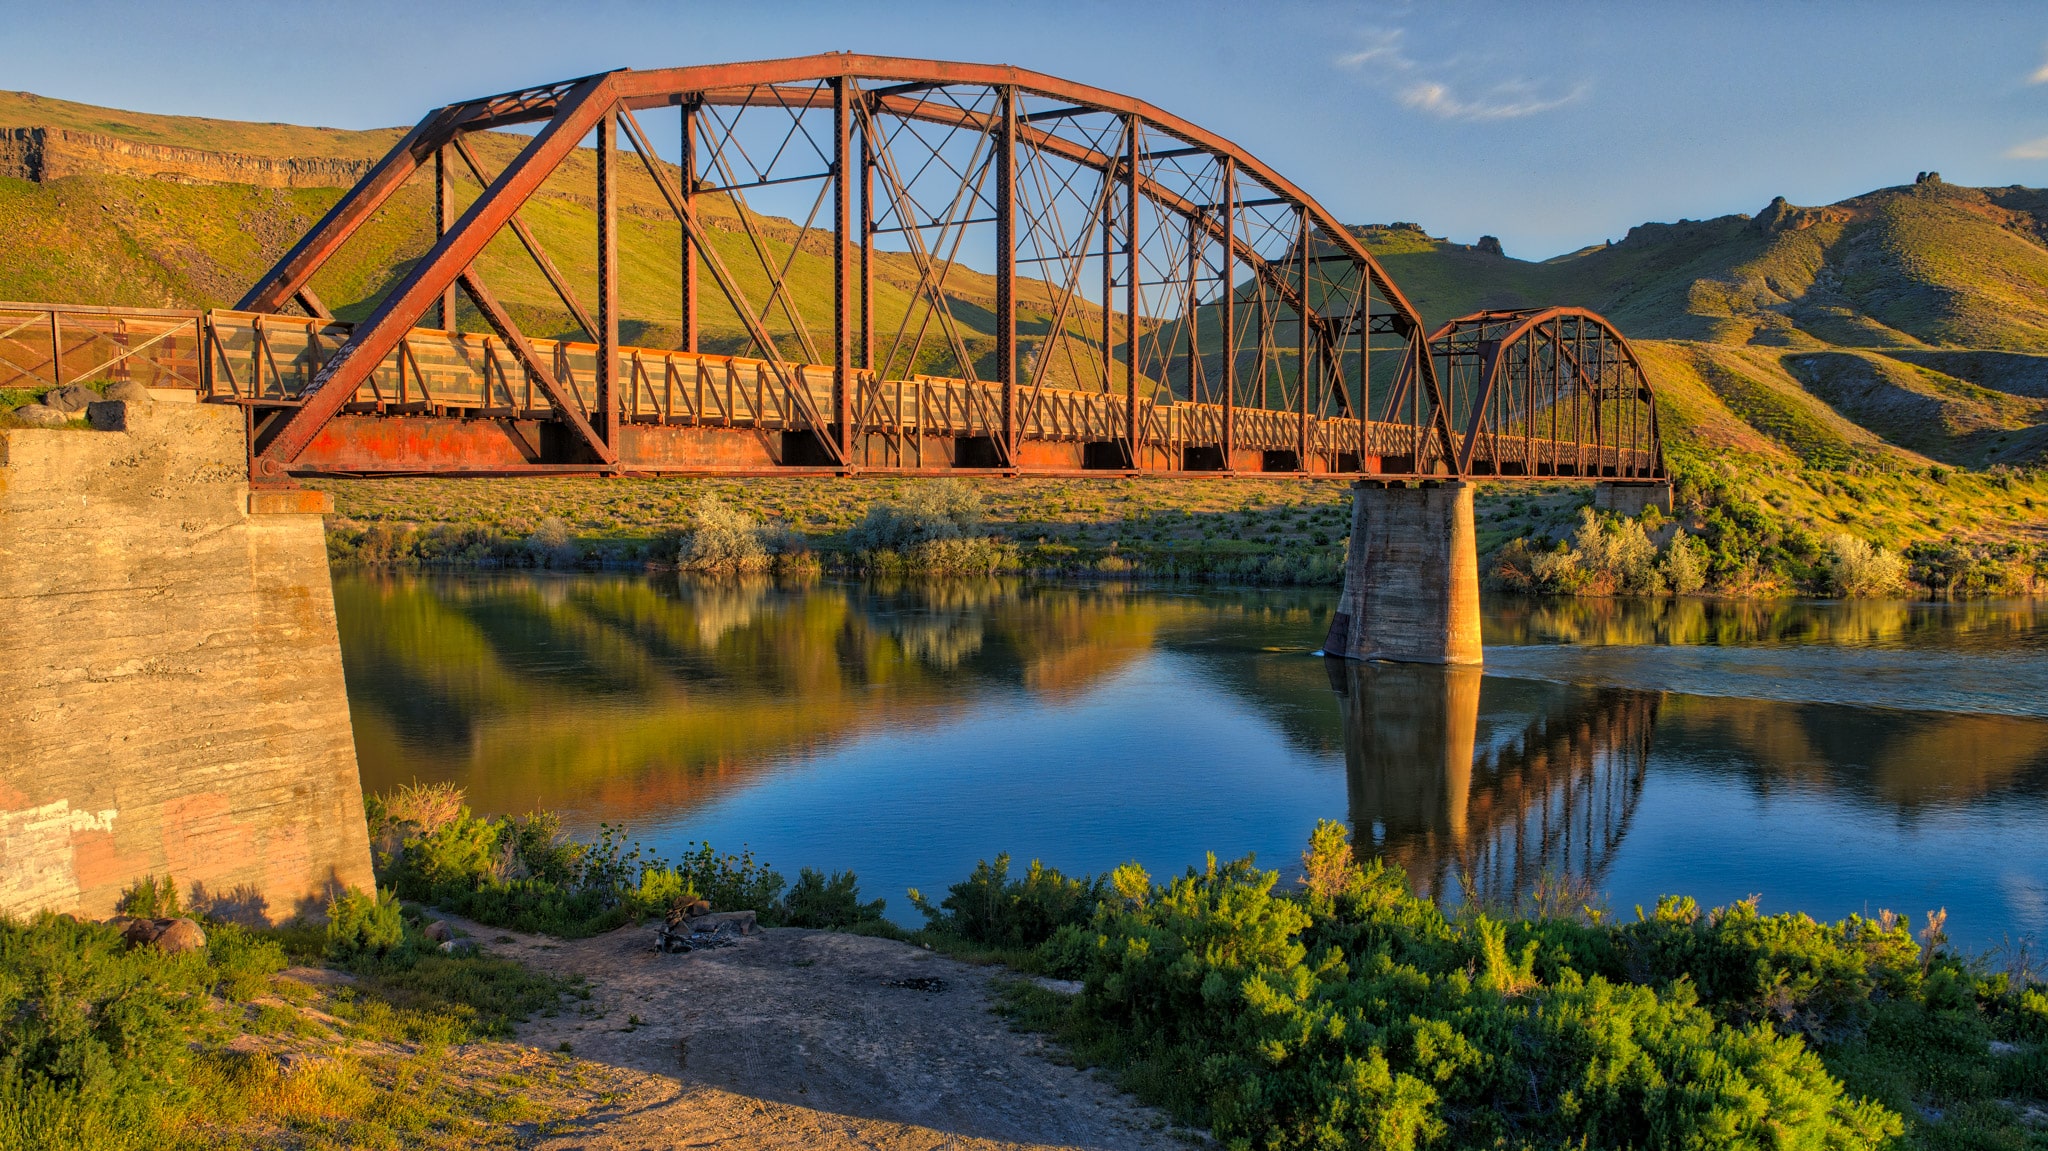 Guffey Bridge is a Parker-Through-Truss Railroad Bridge that is now used as a footbridge across the Snake River in Celebration Park near Melba, Idaho. From my Southwest Idaho Photographs.